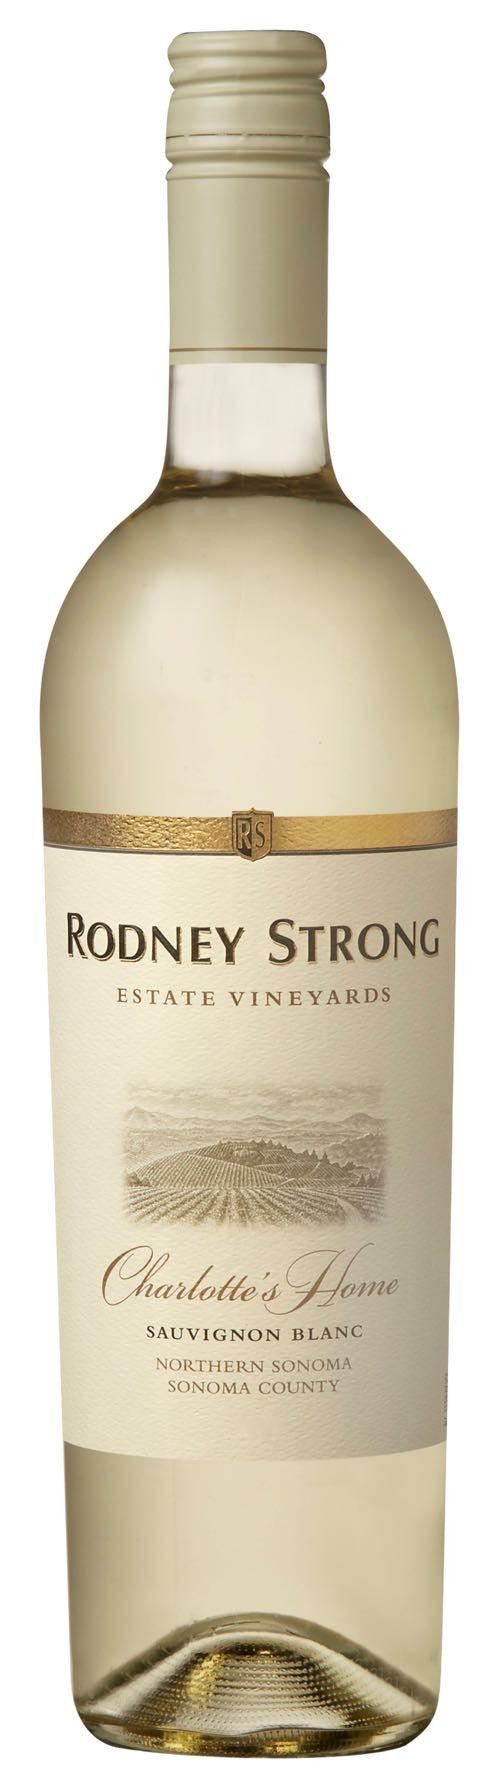 Rodney Strong Charlottes Home Sauvignon Blanc